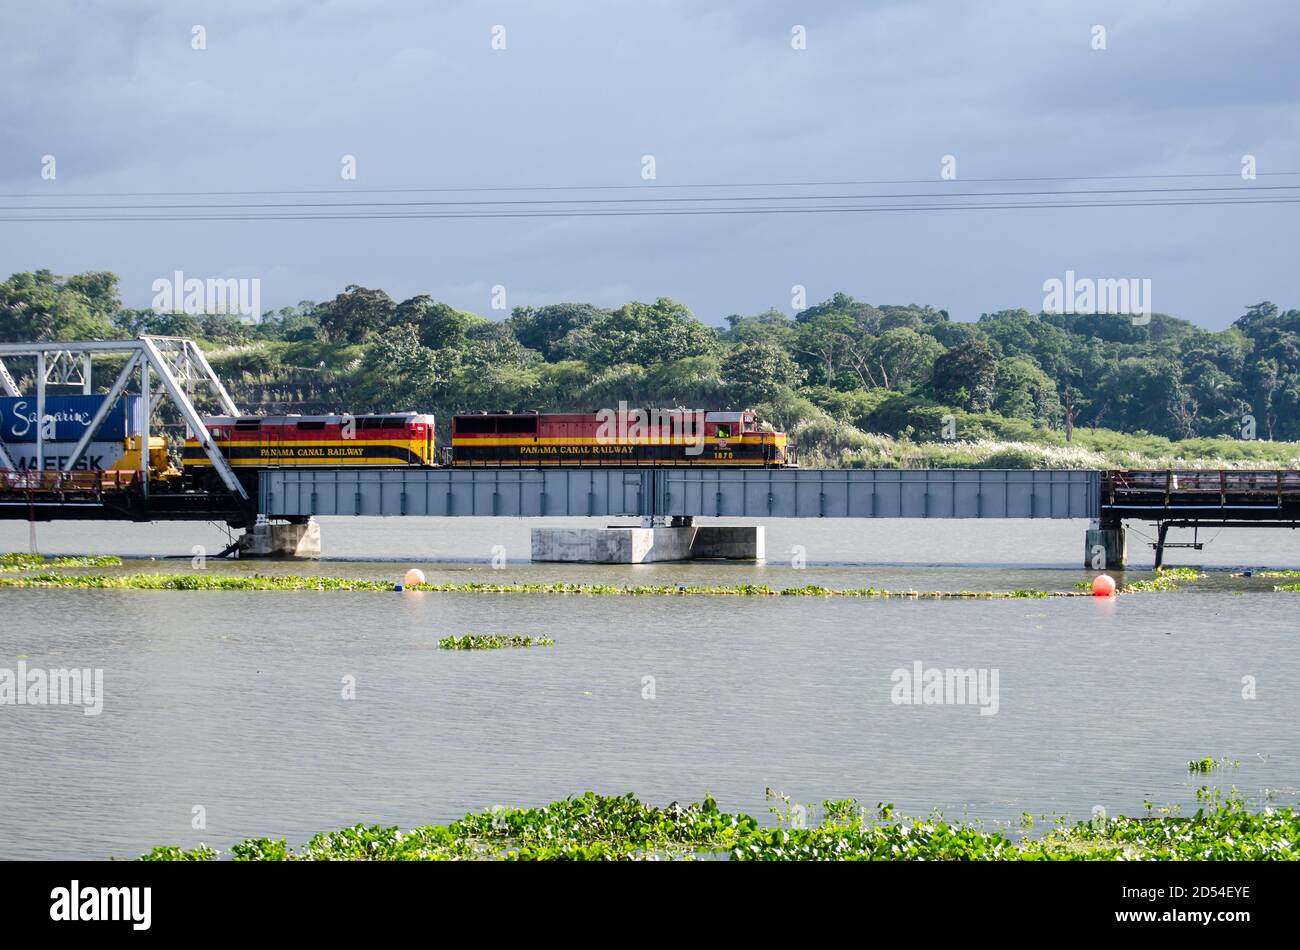 Panama Canal Railway passing through Gamboa Area next to the Panama Canal Stock Photo